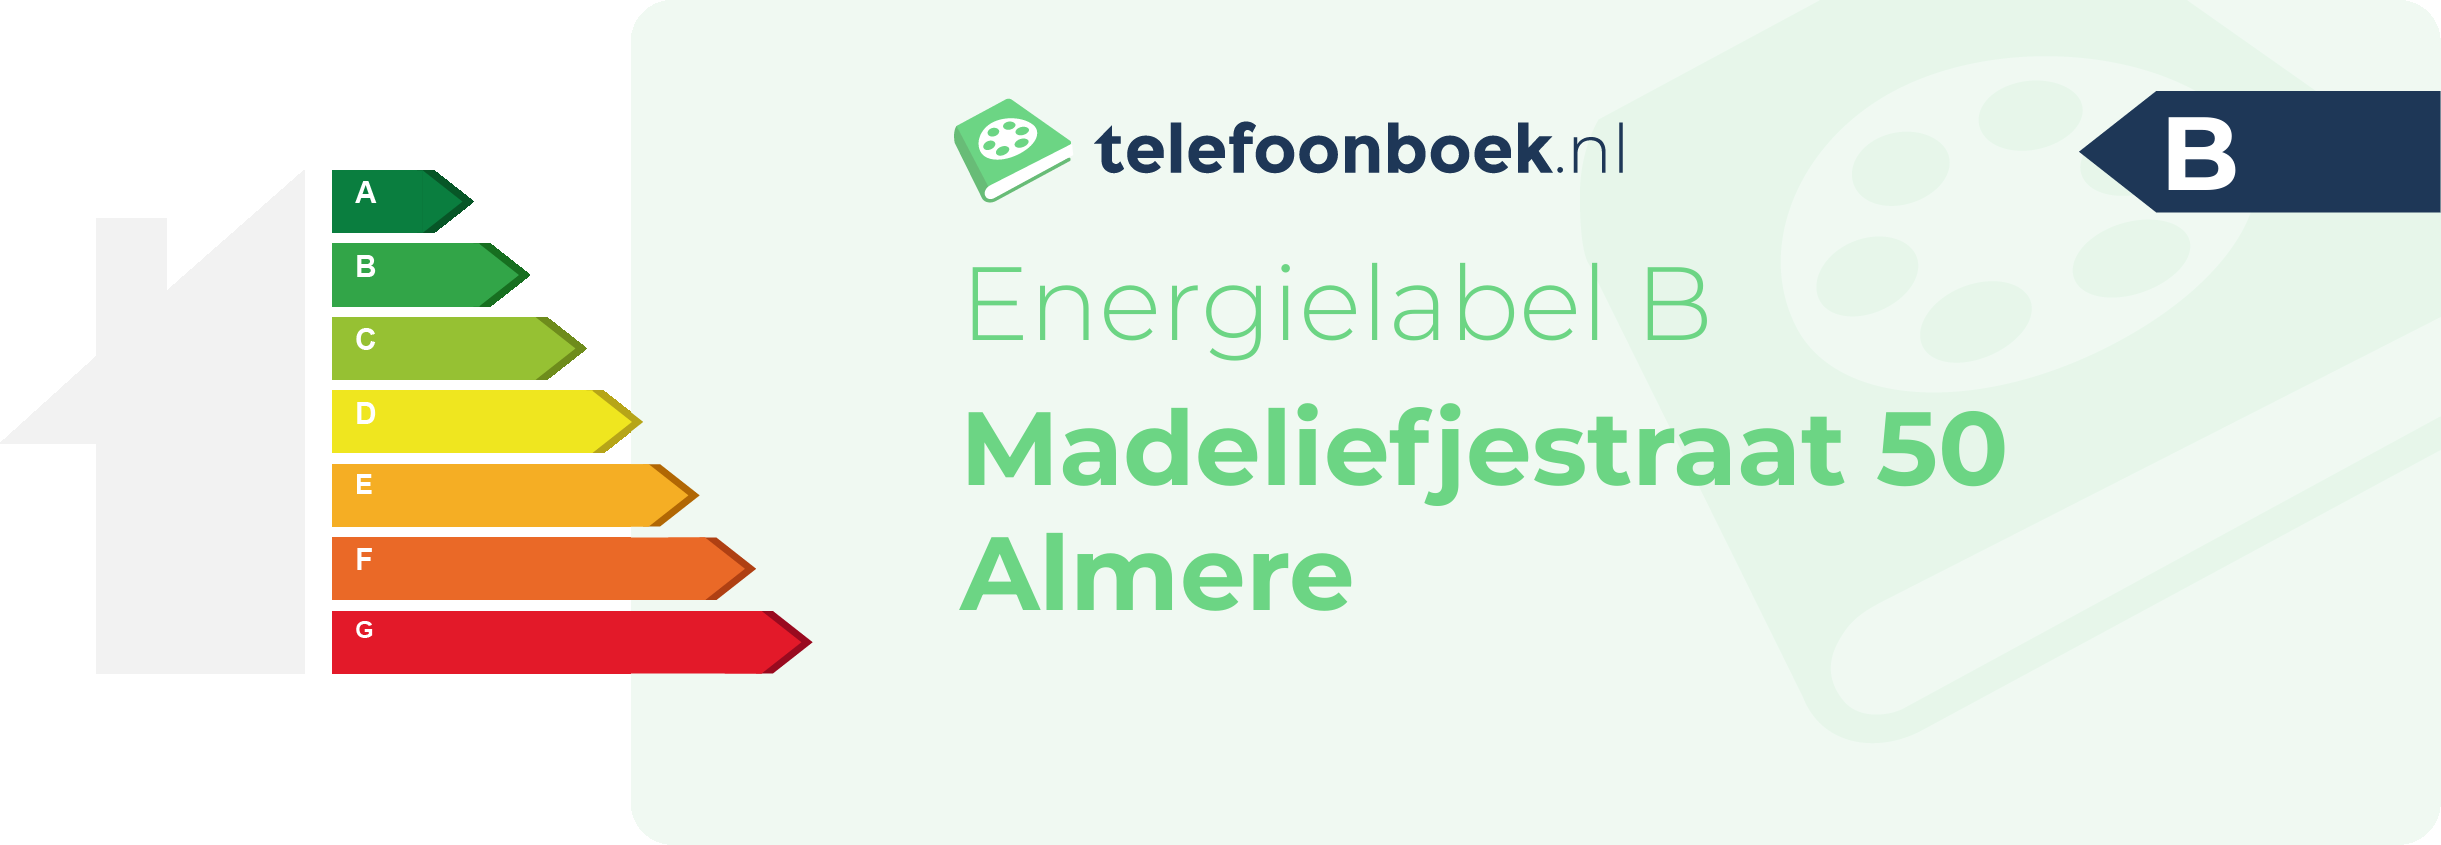 Energielabel Madeliefjestraat 50 Almere